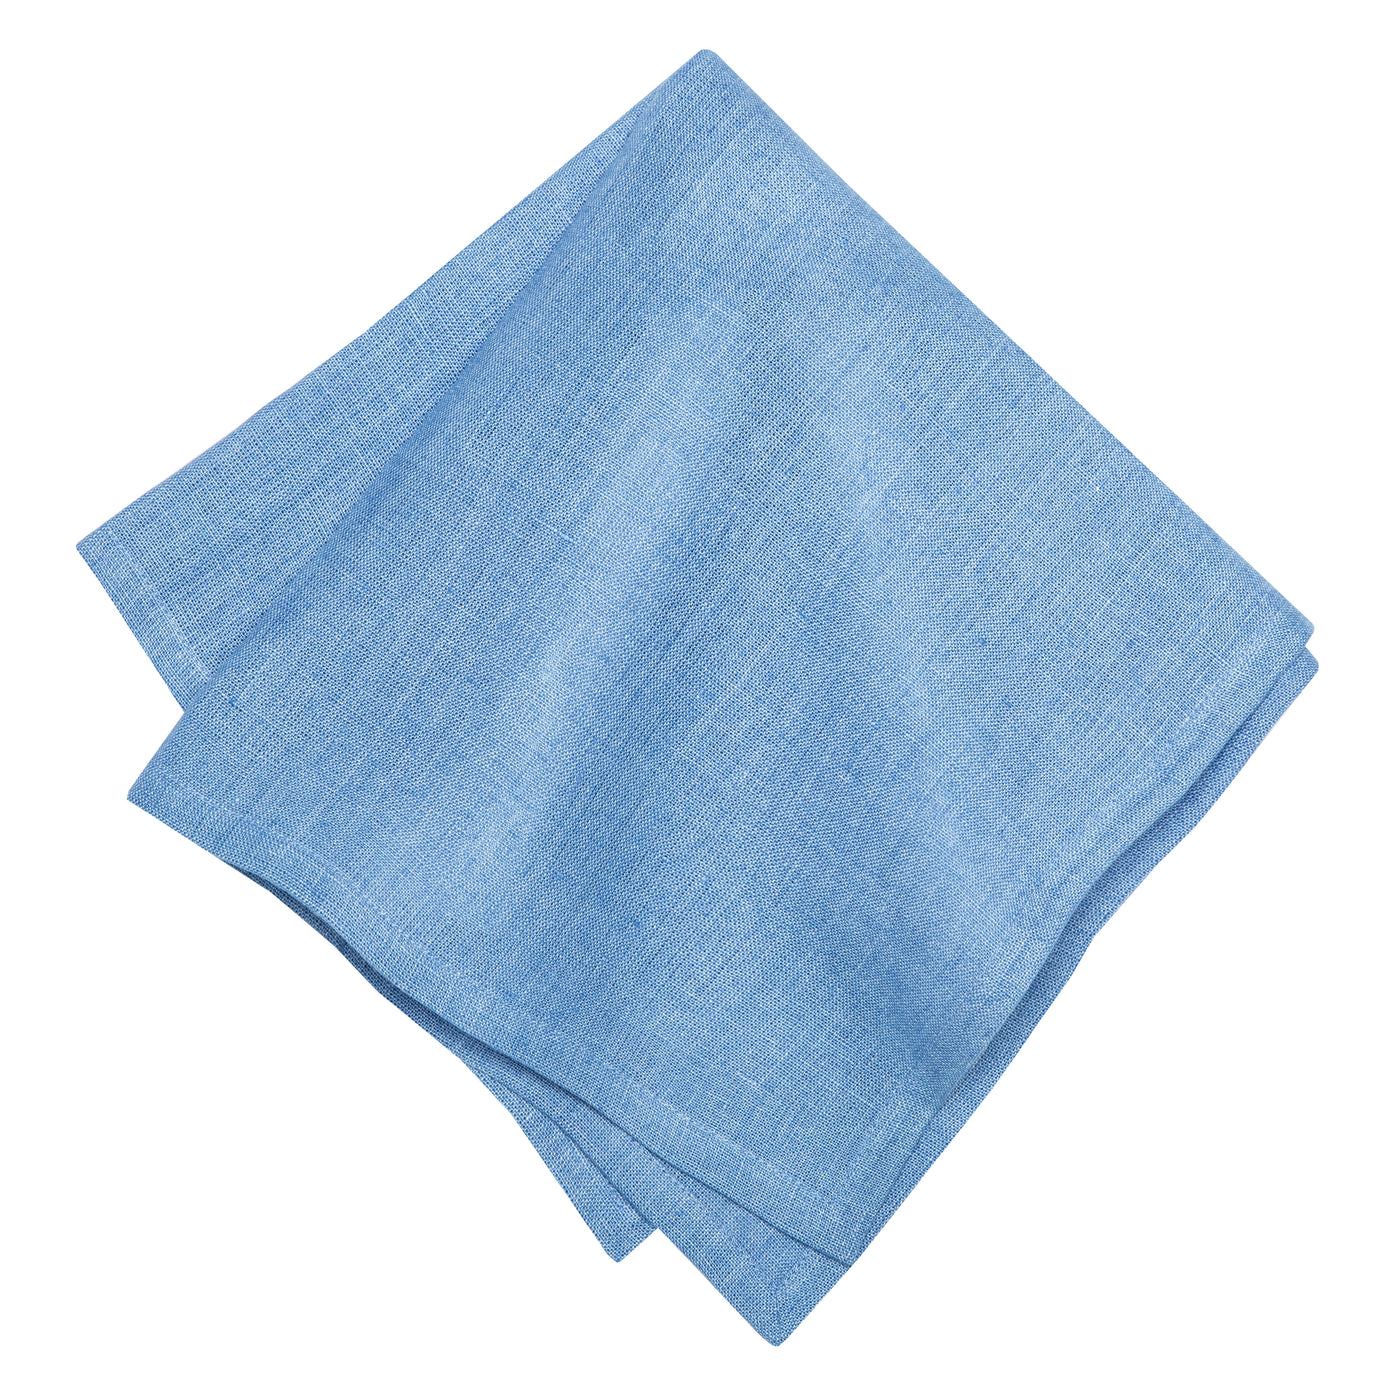  RIANGI Textured Light Blue Cloth Napkins Set of 6 20x20 Inch-  Aqua Napkins Cloth Light Blue Napkins Cloth 100% Cotton 20x20 Napkins Over  Sized Kitchen Napkins with Mitered Corners Aqua Cloth